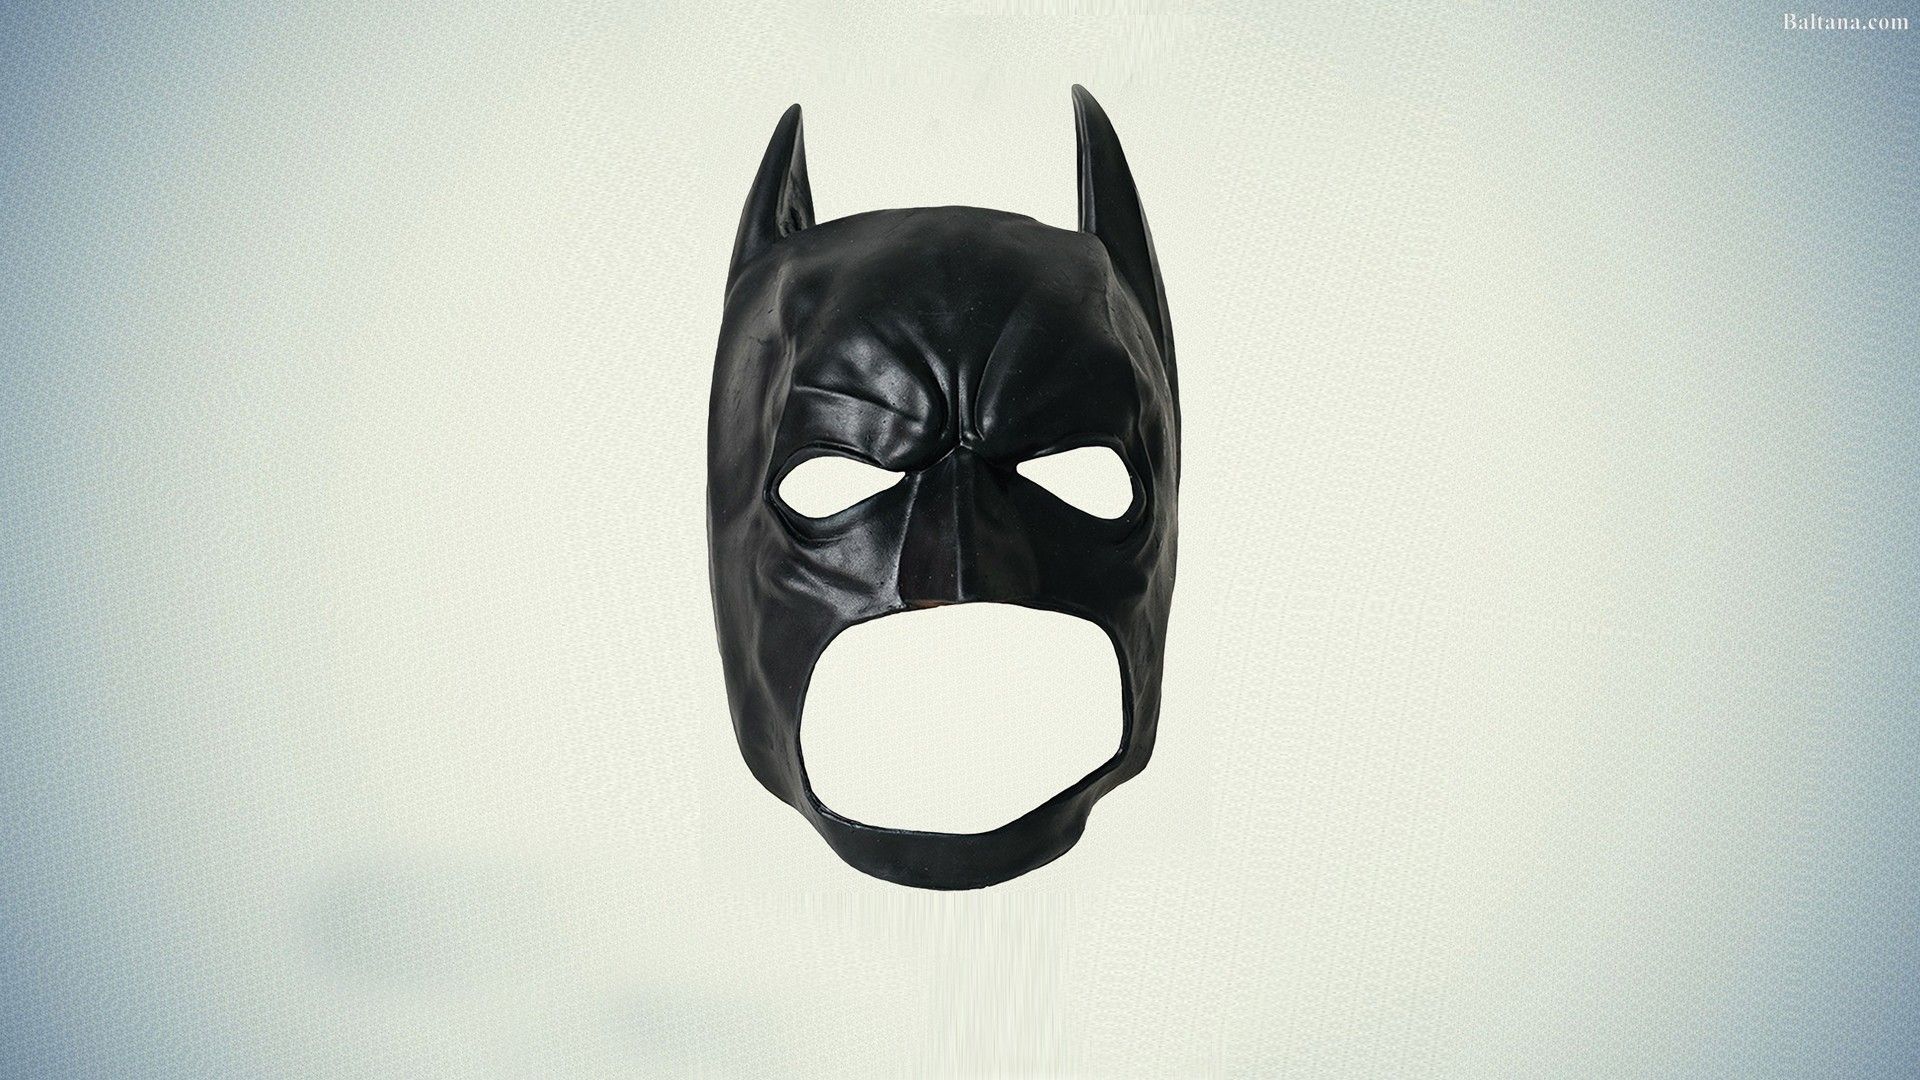 Batman Mask Desktop Wallpaper 29588 .baltana.com